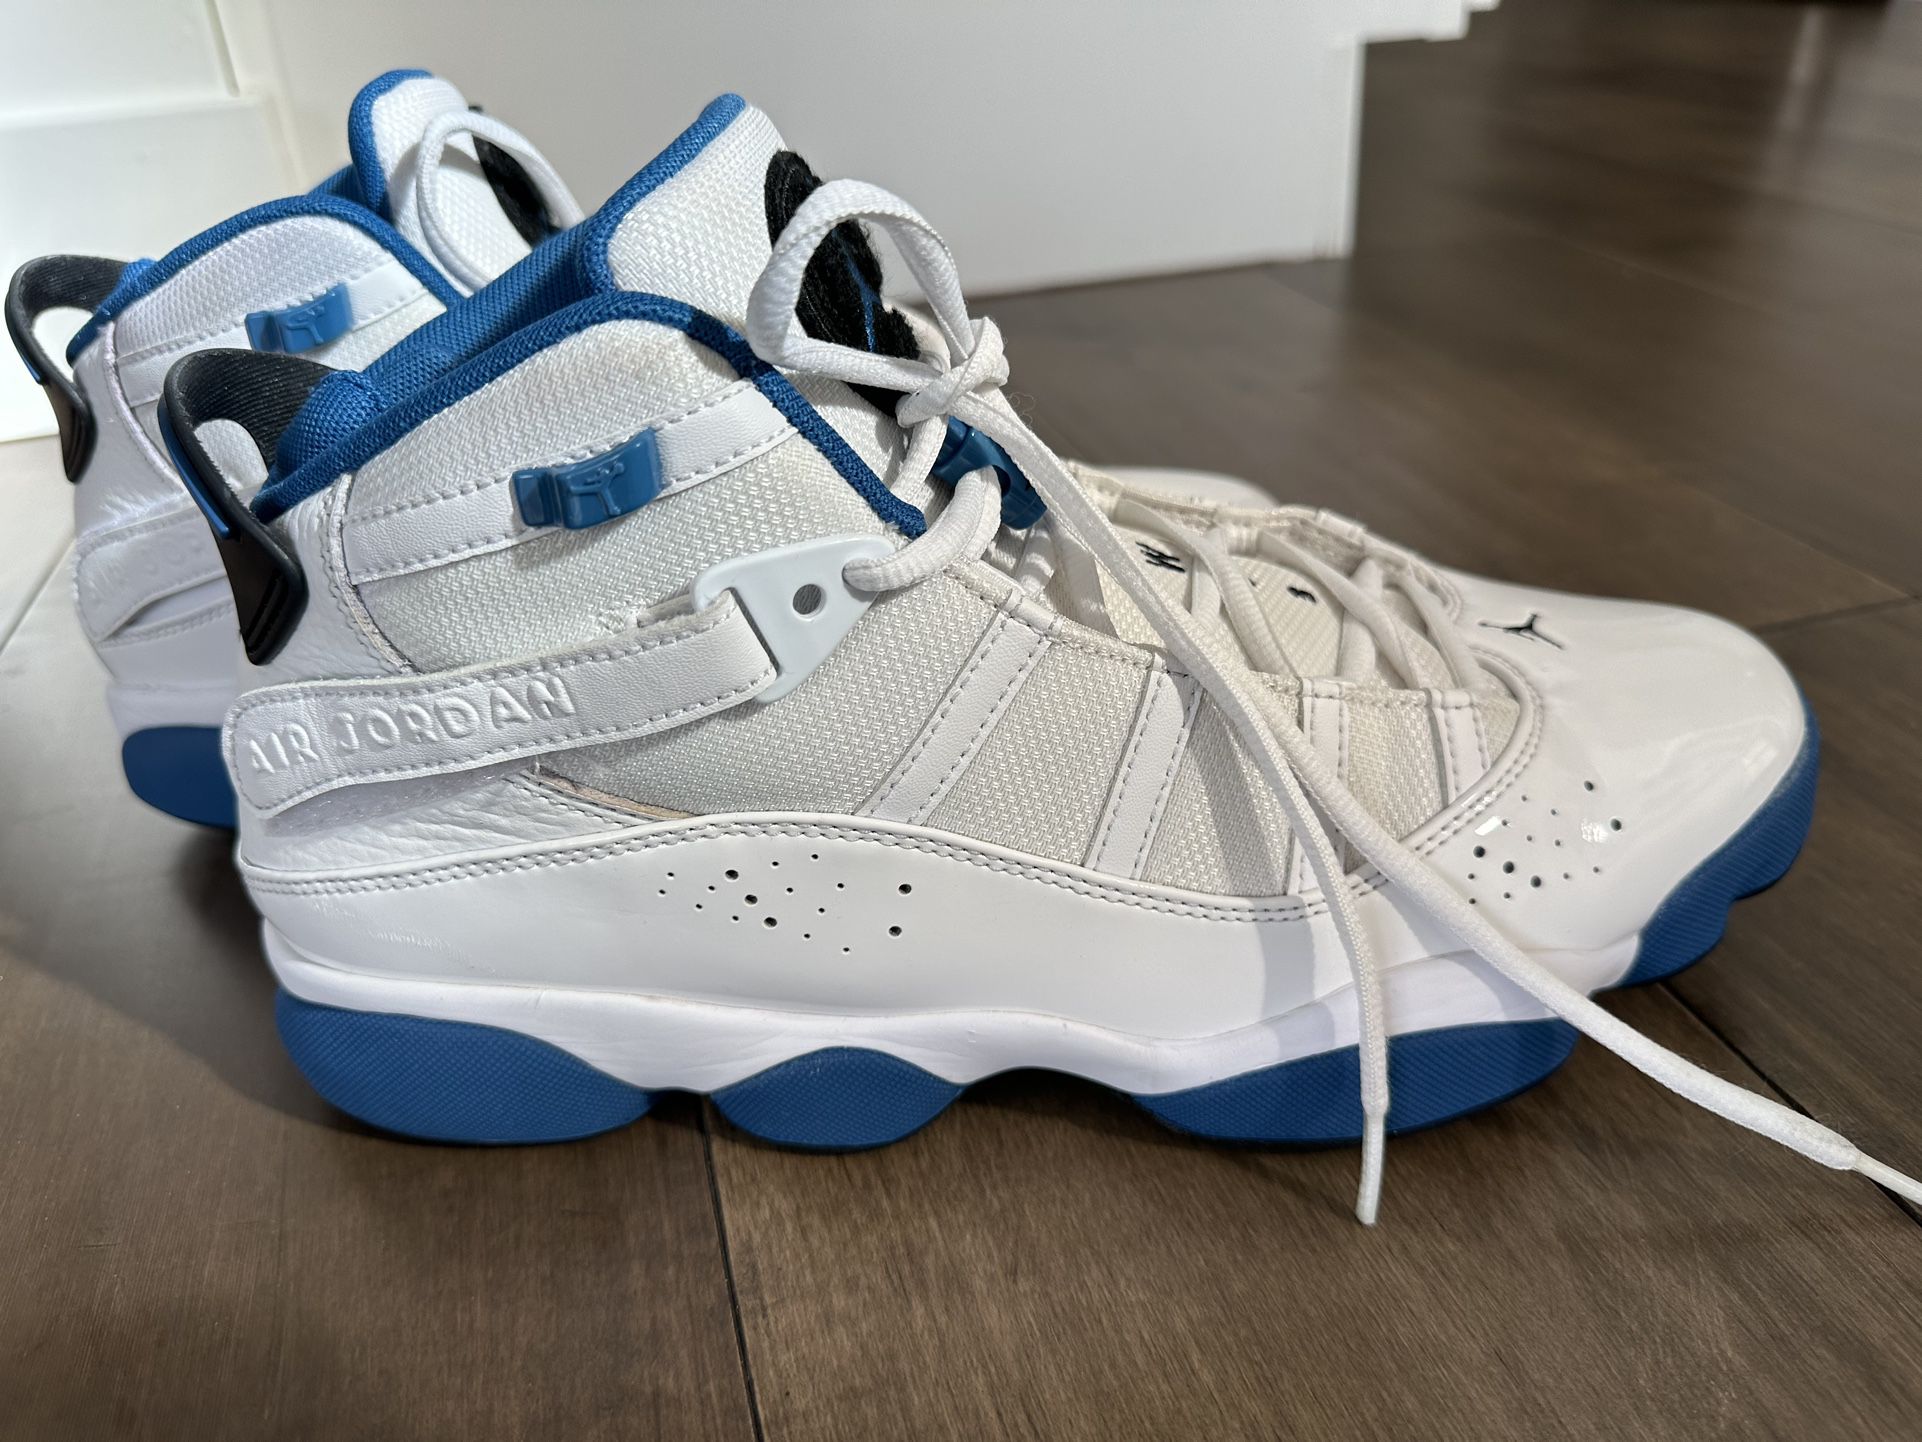 Men’s Air Jordan 6 Rings Size 11 Sneakers Marina Blue 